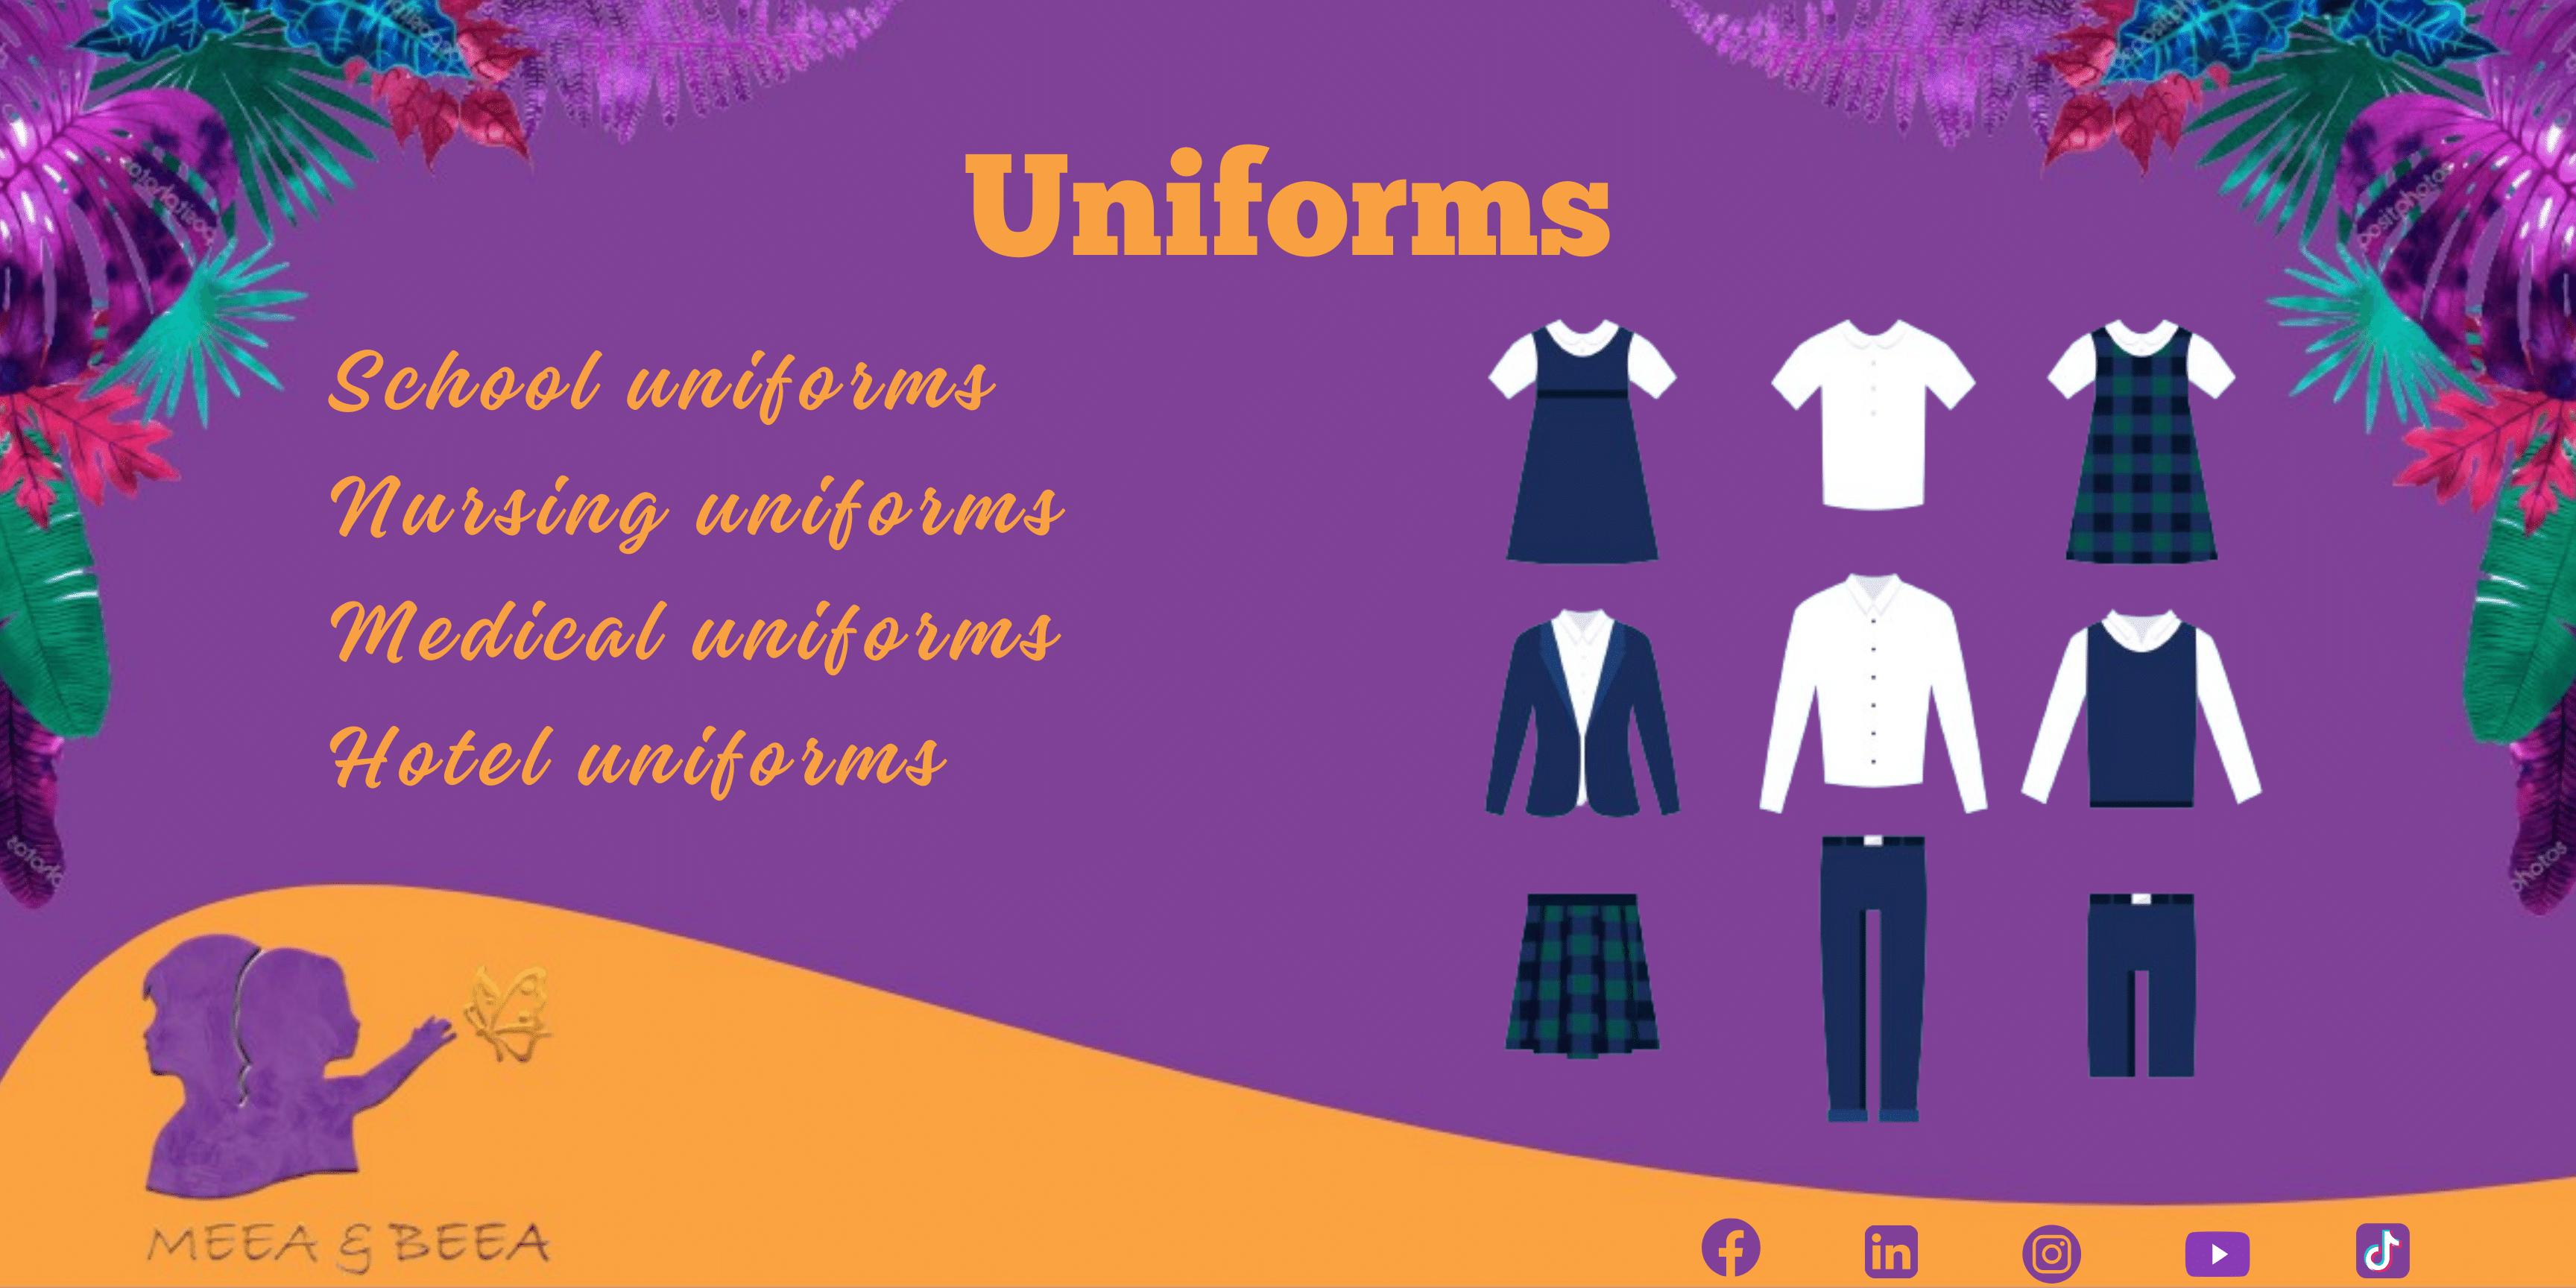 Online Uniform Shop Near you in Dubai, UAE and Pakistan